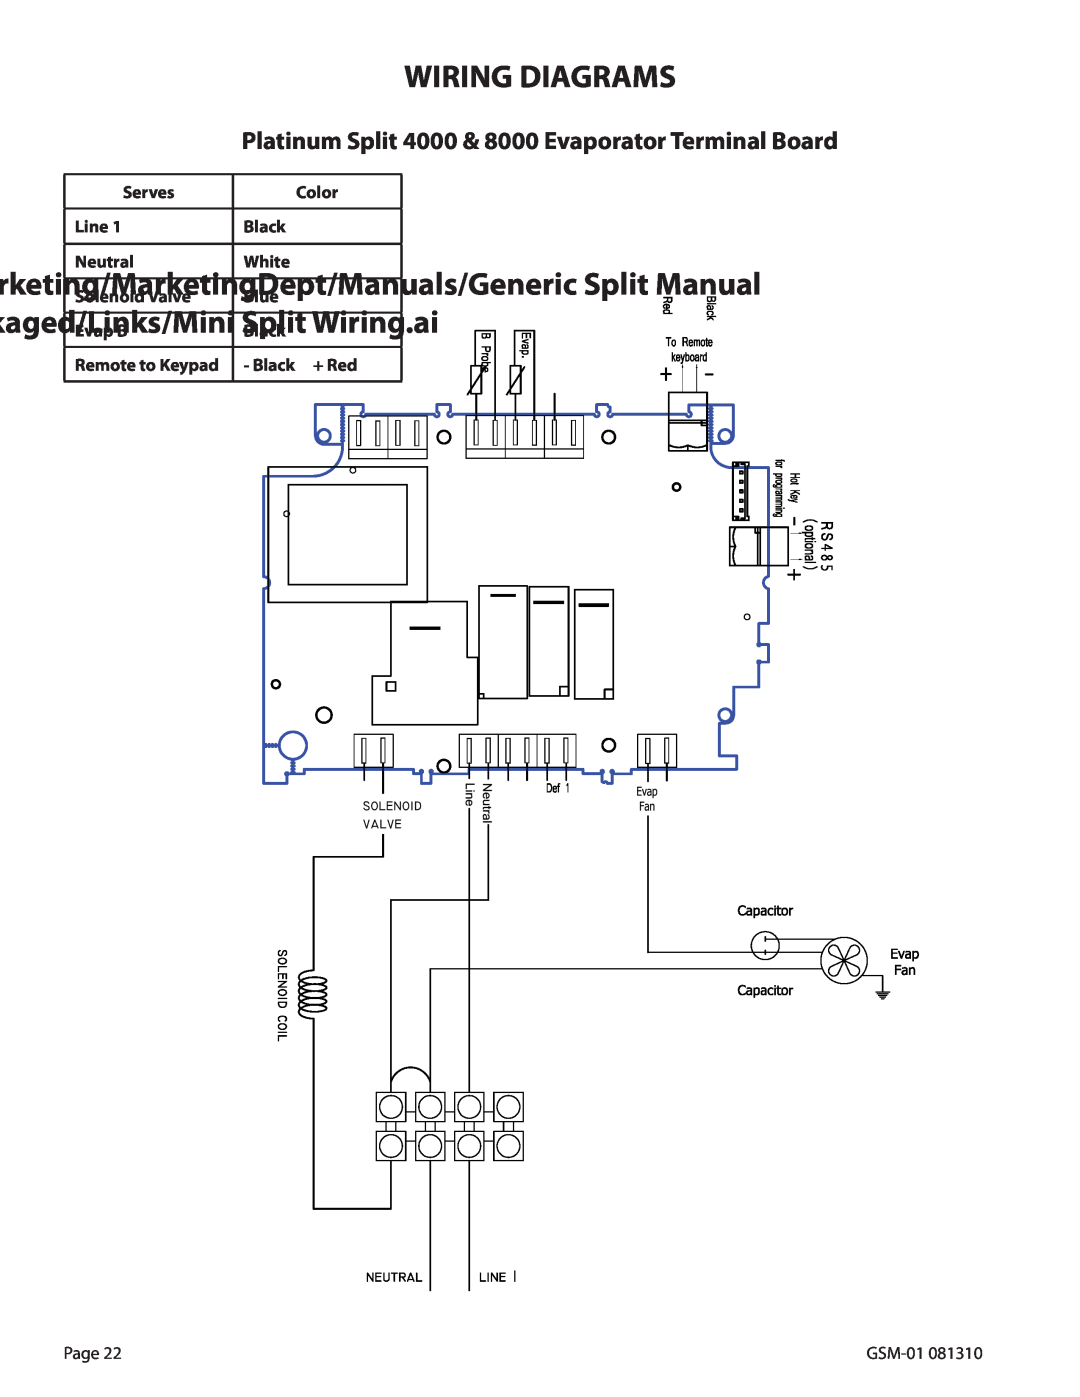 WhisperKool GSM-01, 081310 owner manual Wiring Diagrams, Wiring.ai, kaged/Links/MiniEvap B 